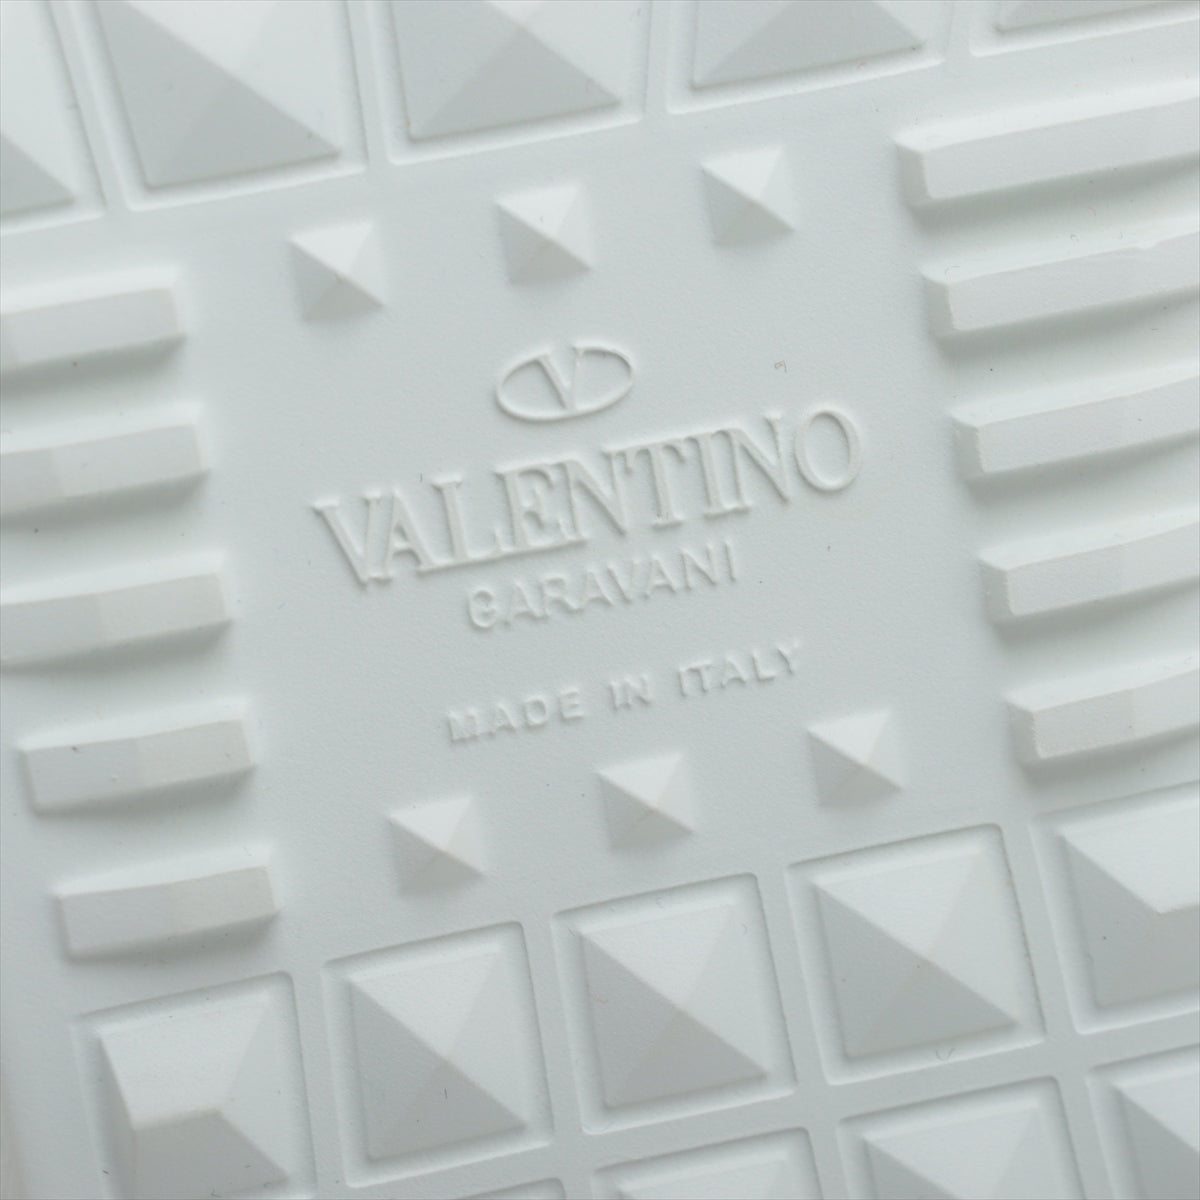 Valentino Garavani Leather Trainers EU37 1/2  White Atelier Rose Edition Box Bag